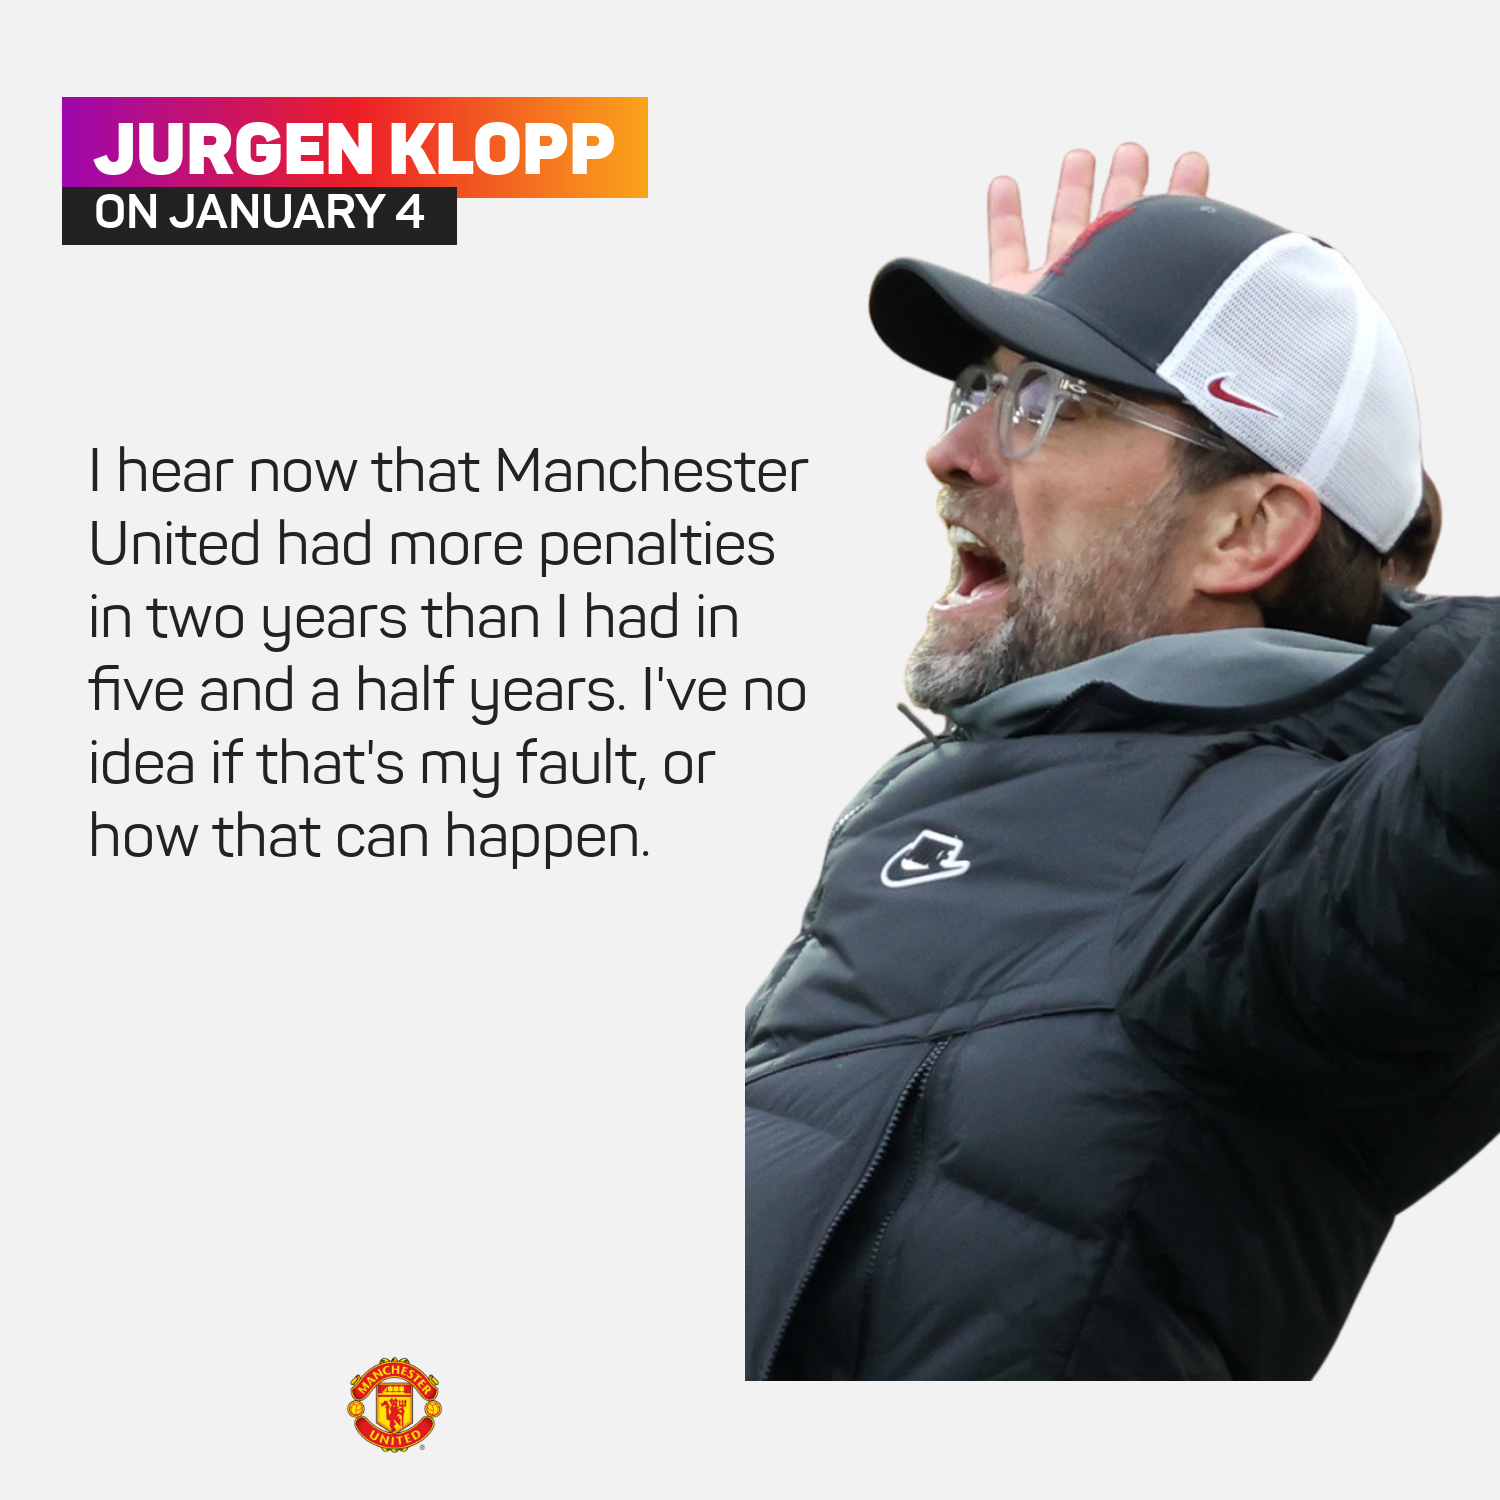 Jurgen Klopp on Manchester United penalties